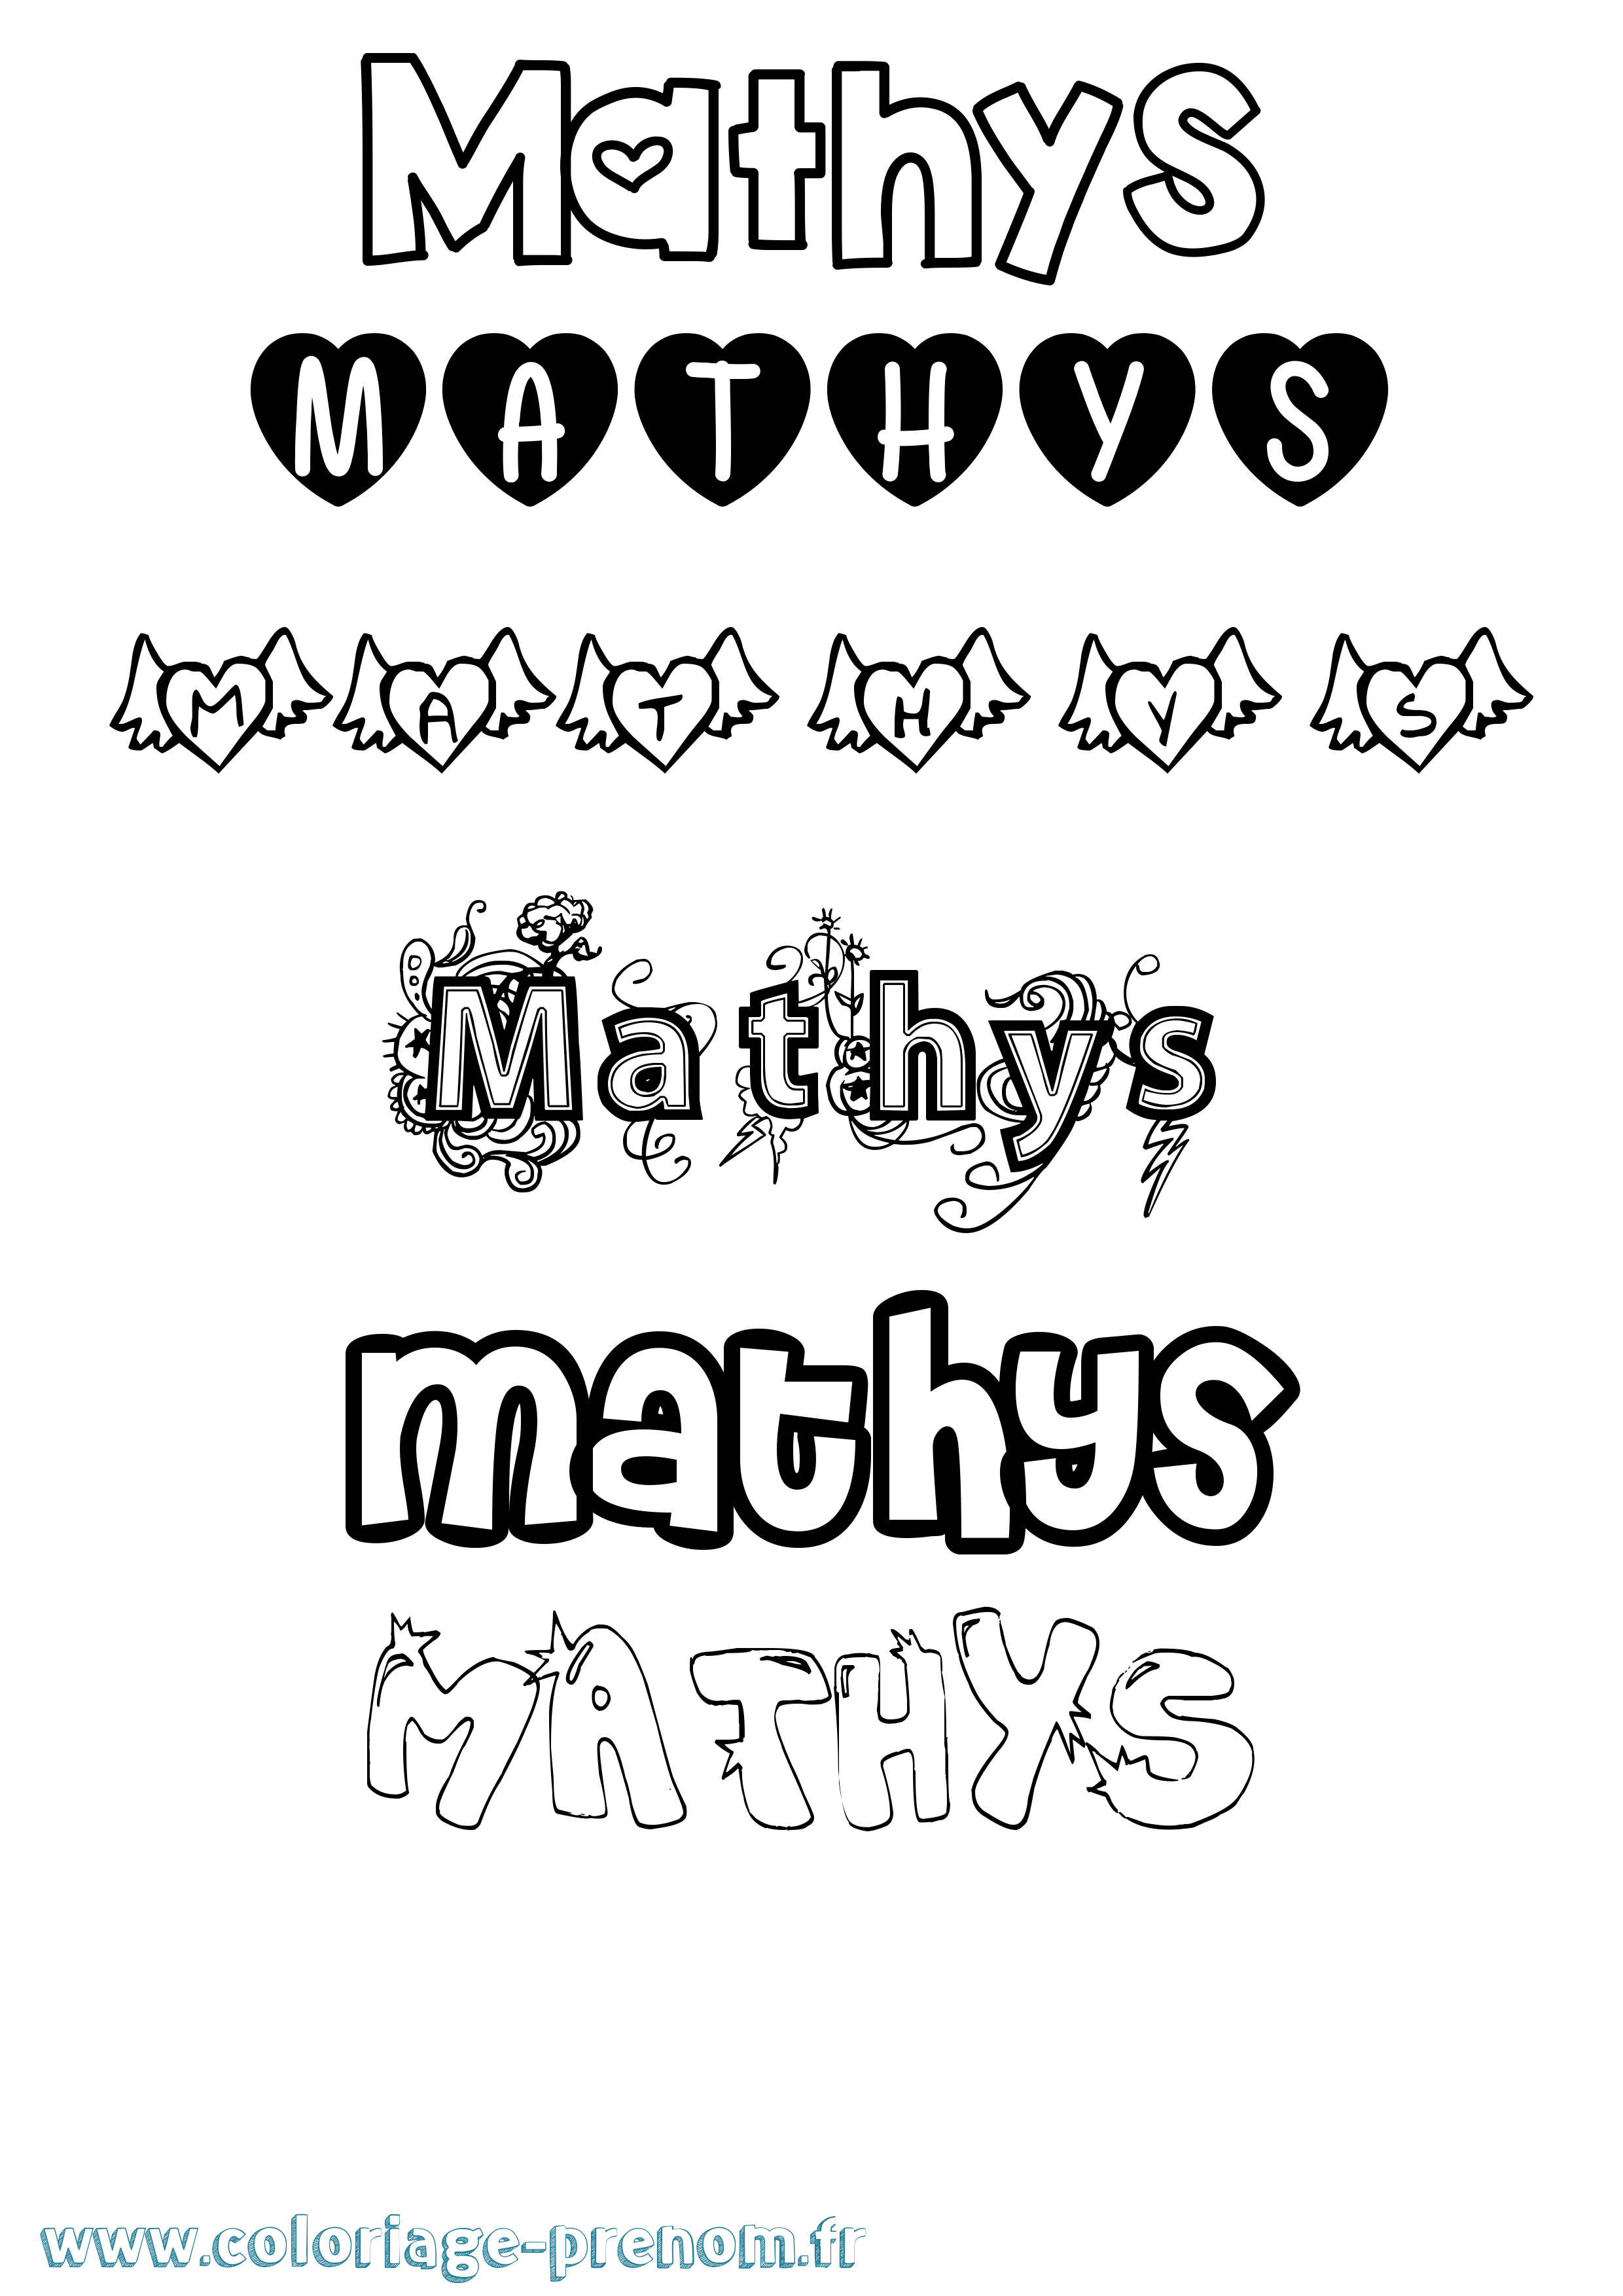 Coloriage prénom Mathys